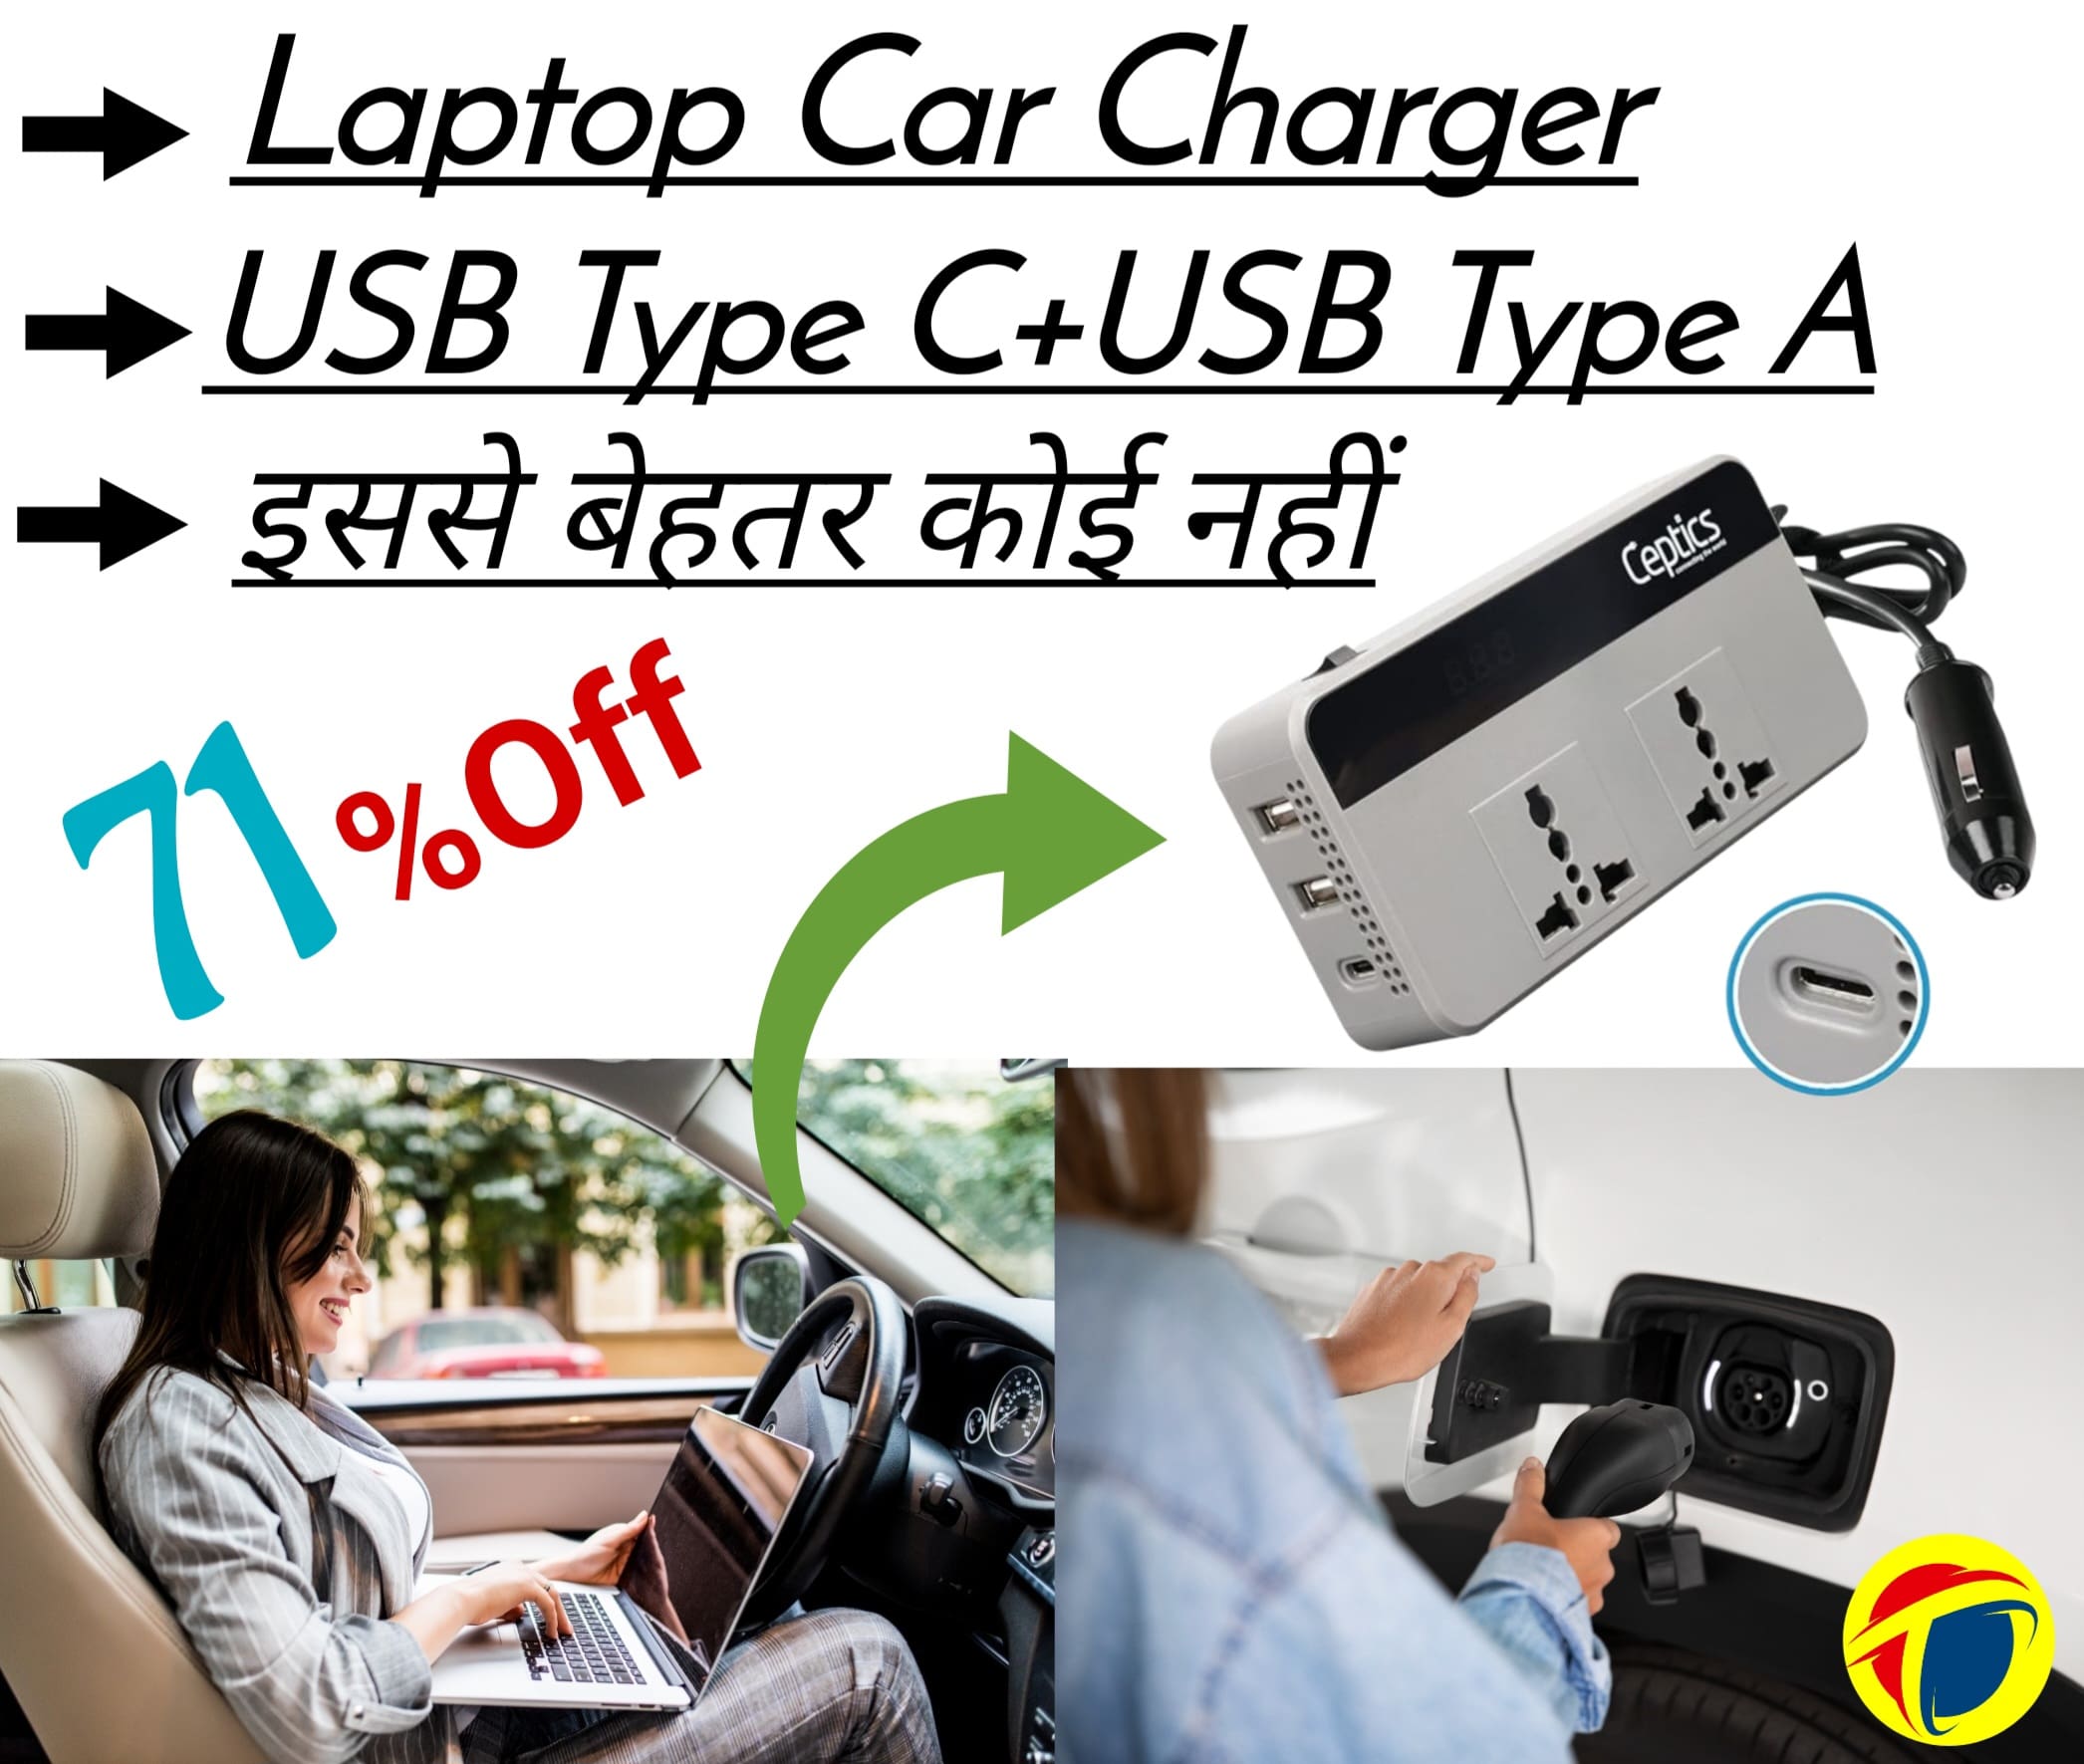 Best Car Charger Socket - Laptop Car Charger